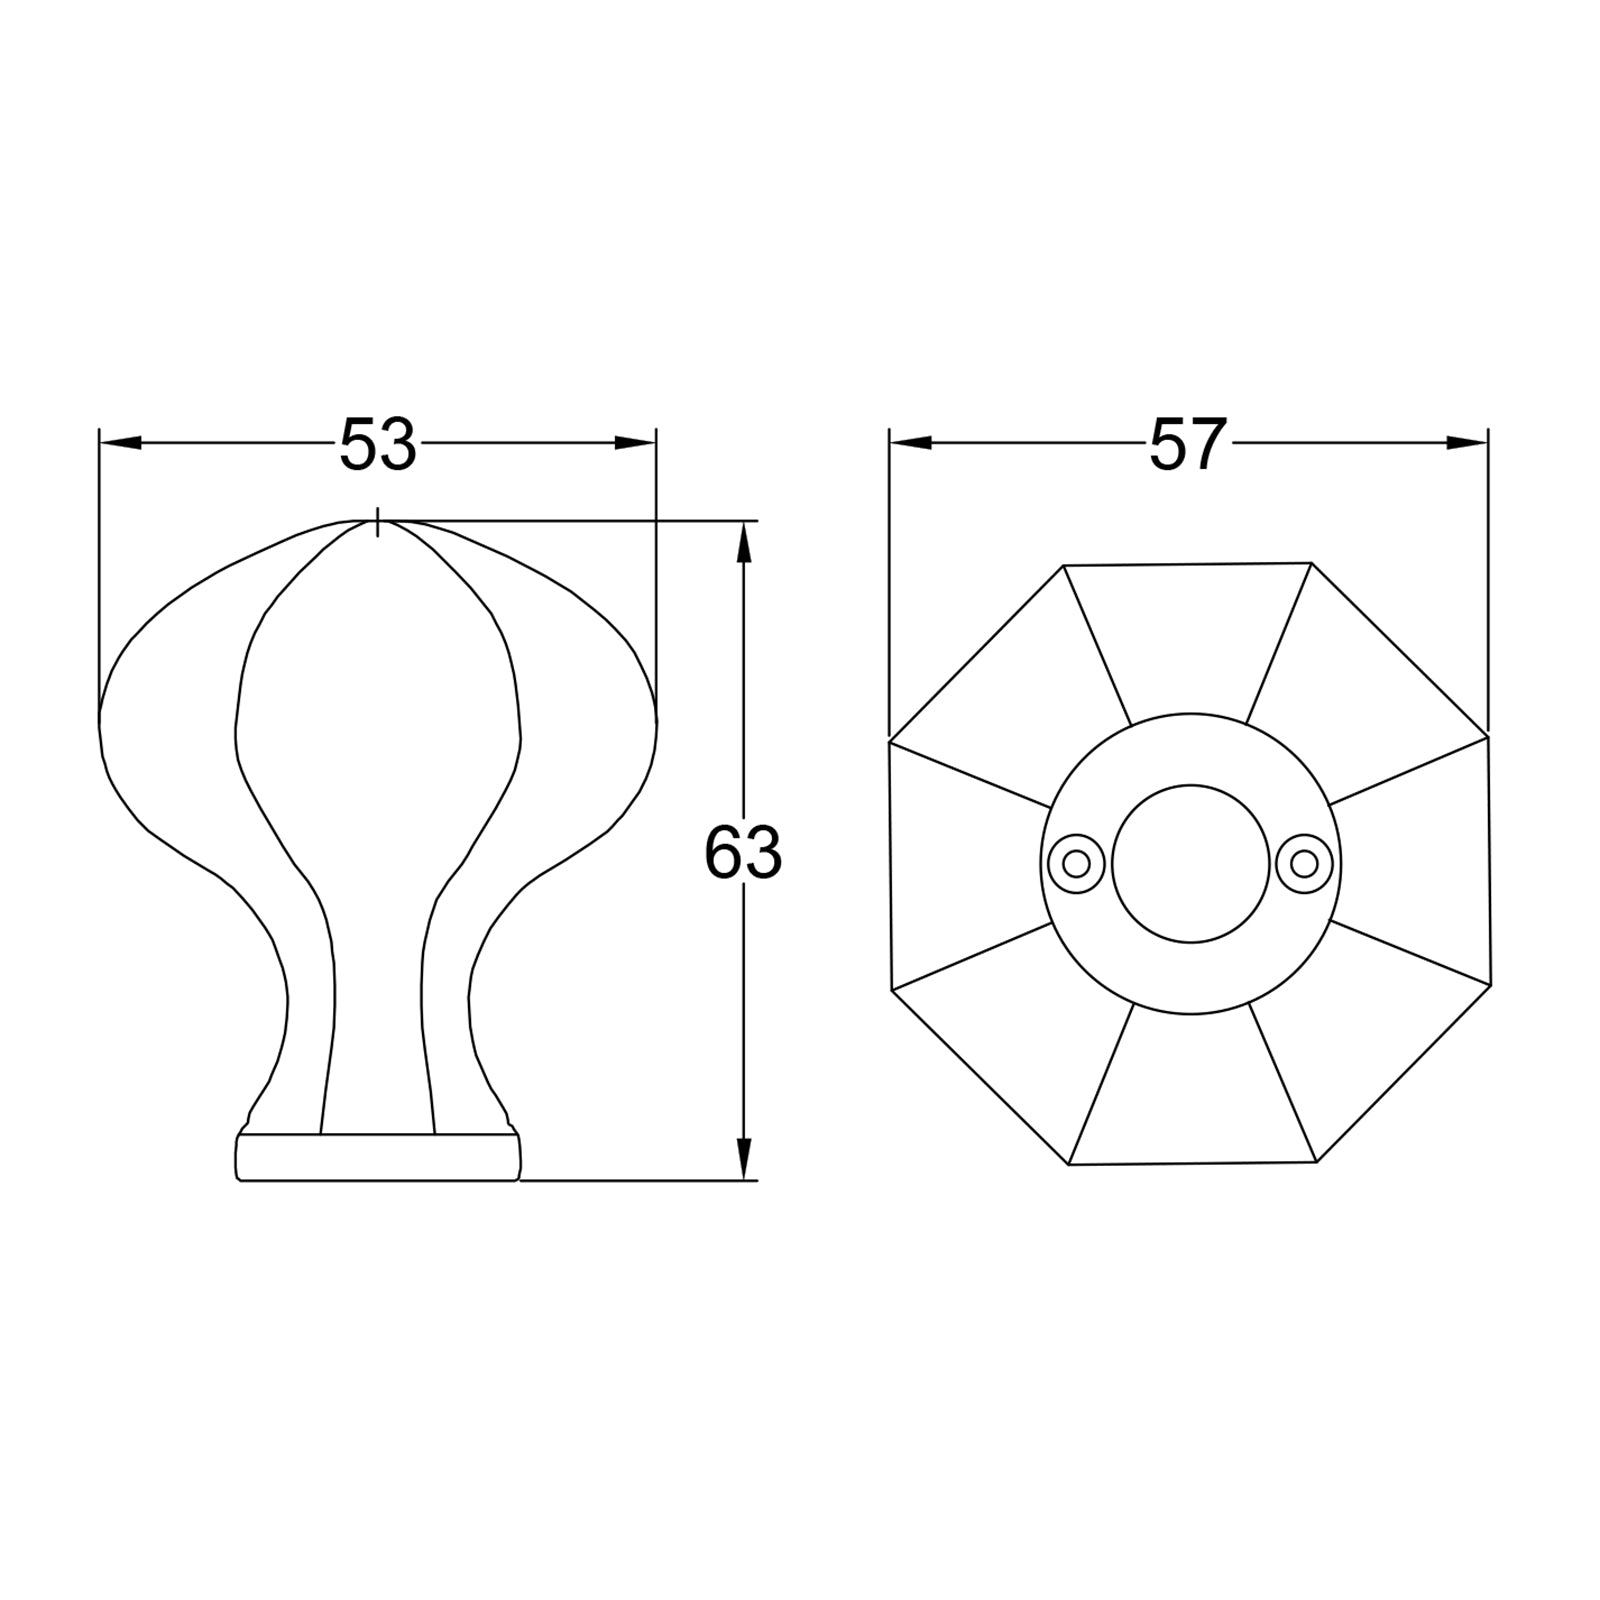 dimension drawing of octagonal door knob SHOW